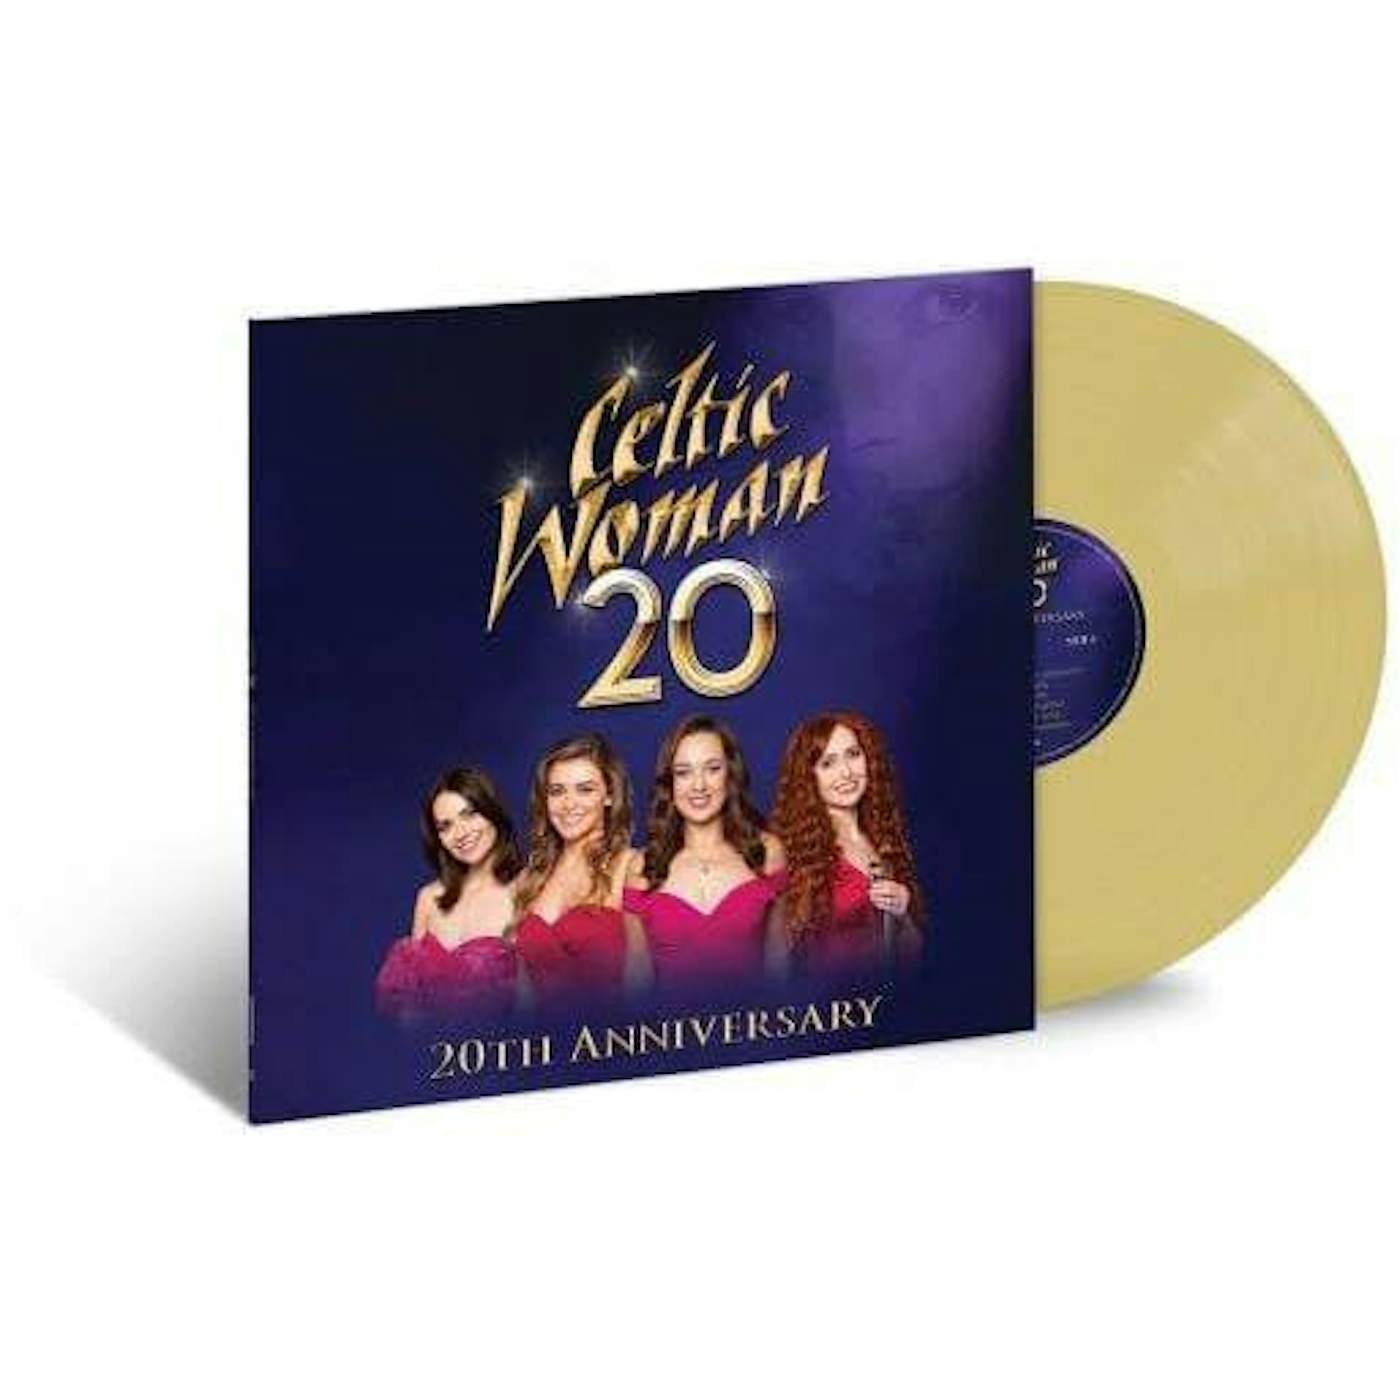 Celtic Woman 20 (20th Anniversary/Gold) Vinyl Record